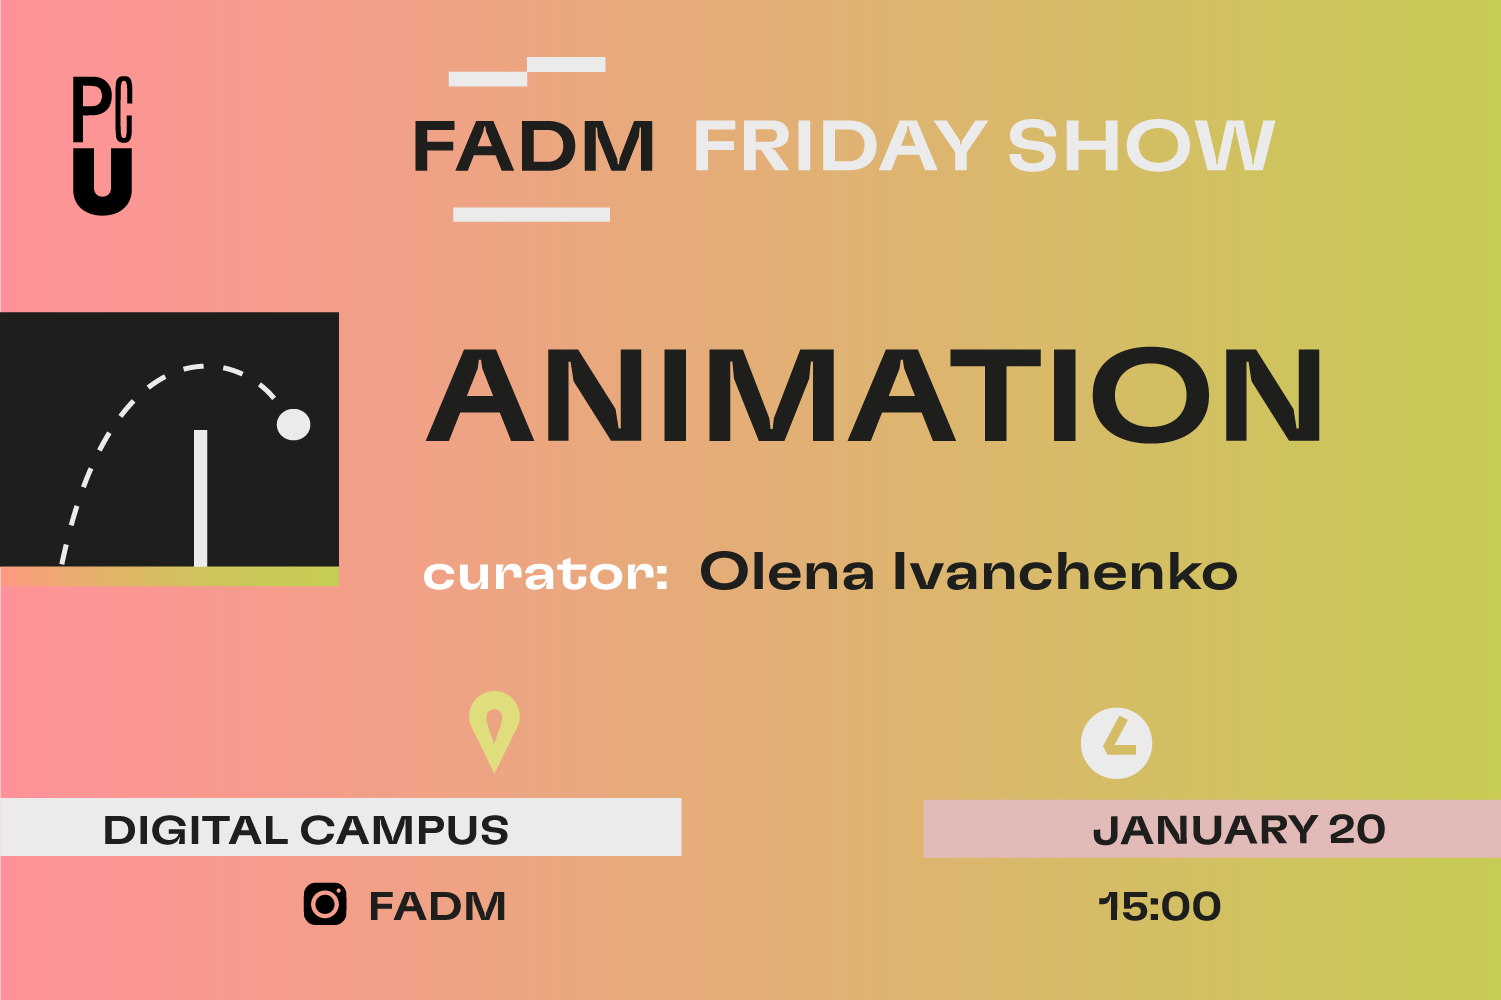 Friday Show Animation